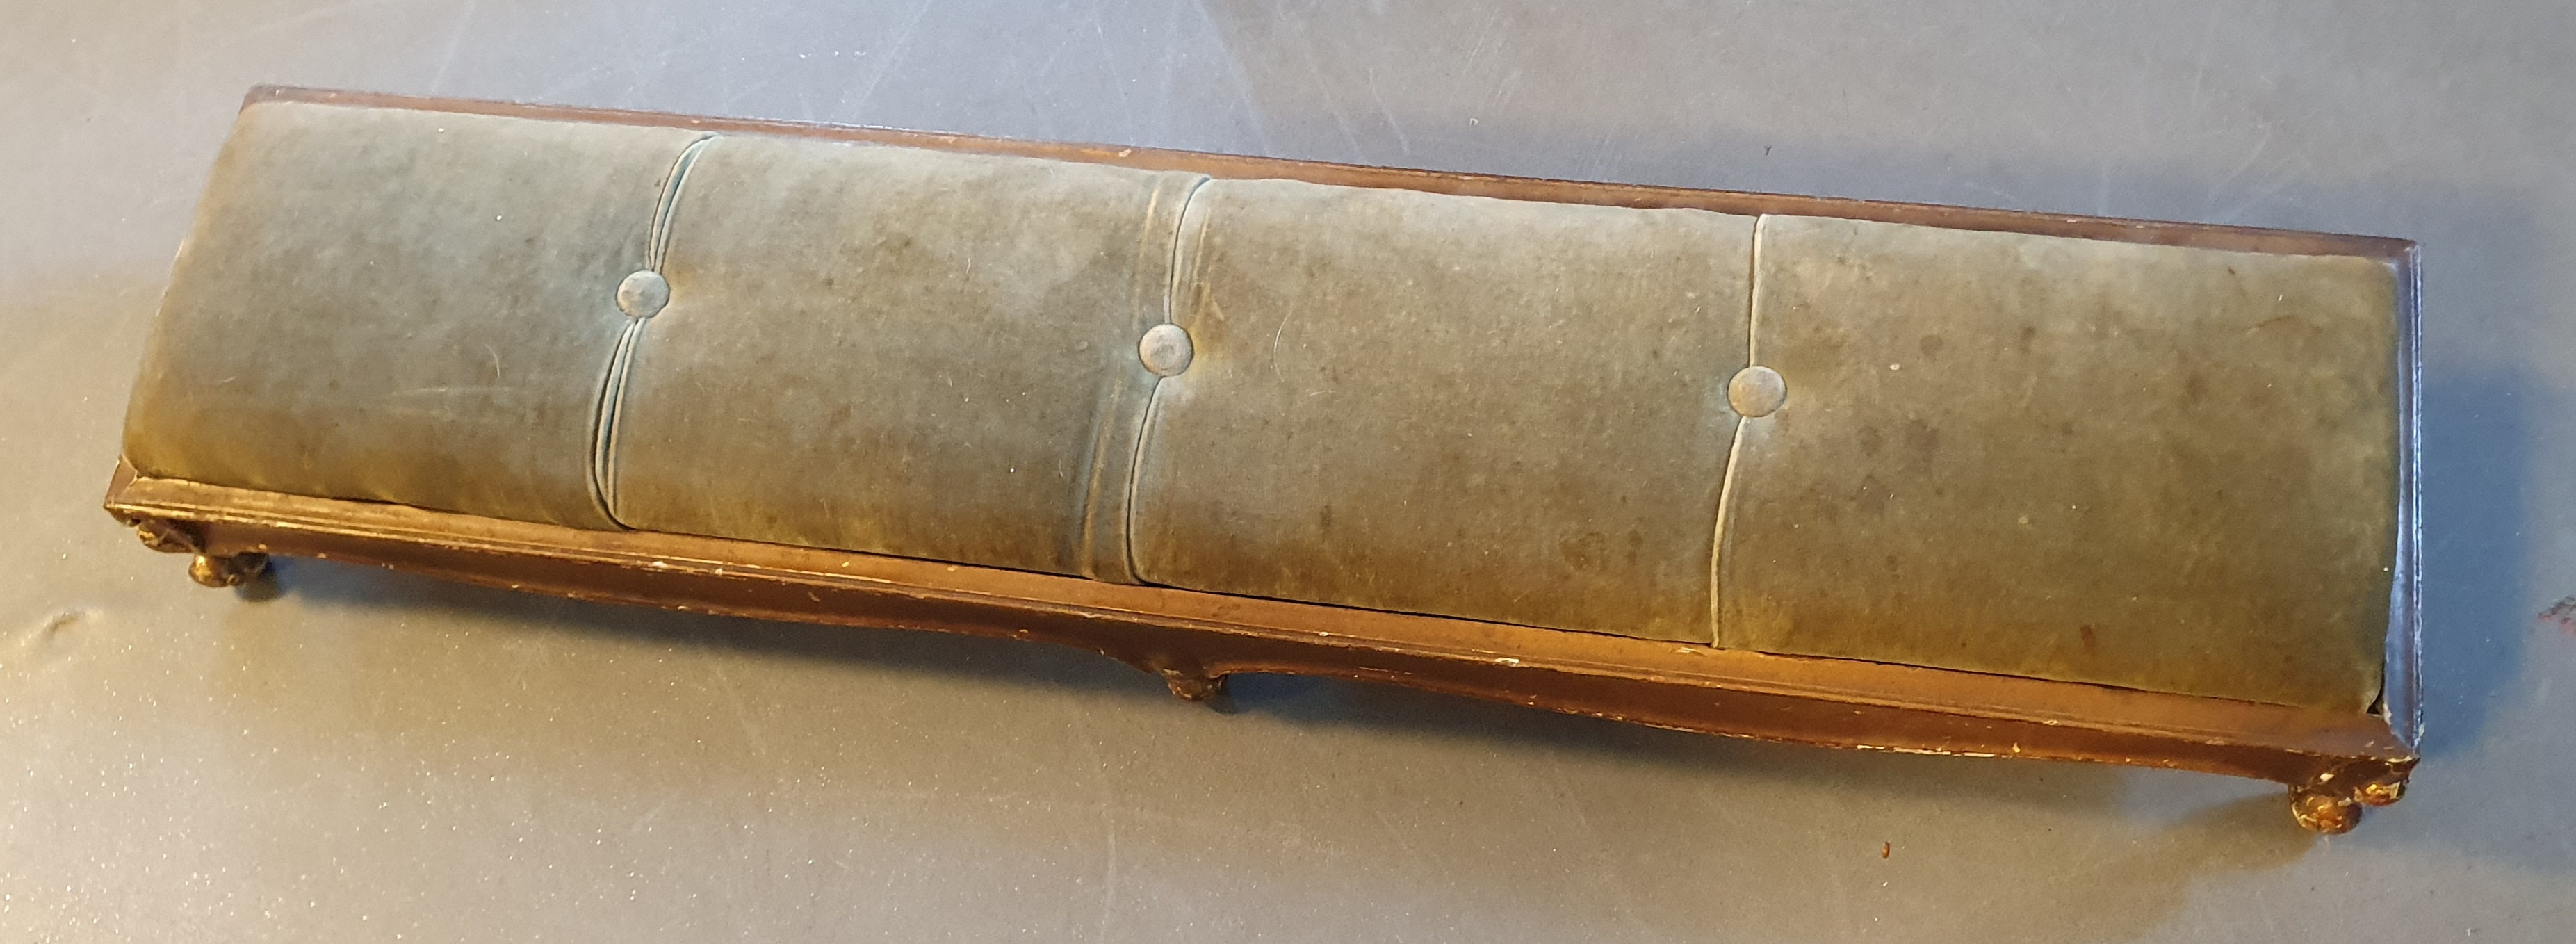 Antique Prayer Stool w/original padded cushioning - 113 x 25cm - Image 2 of 2